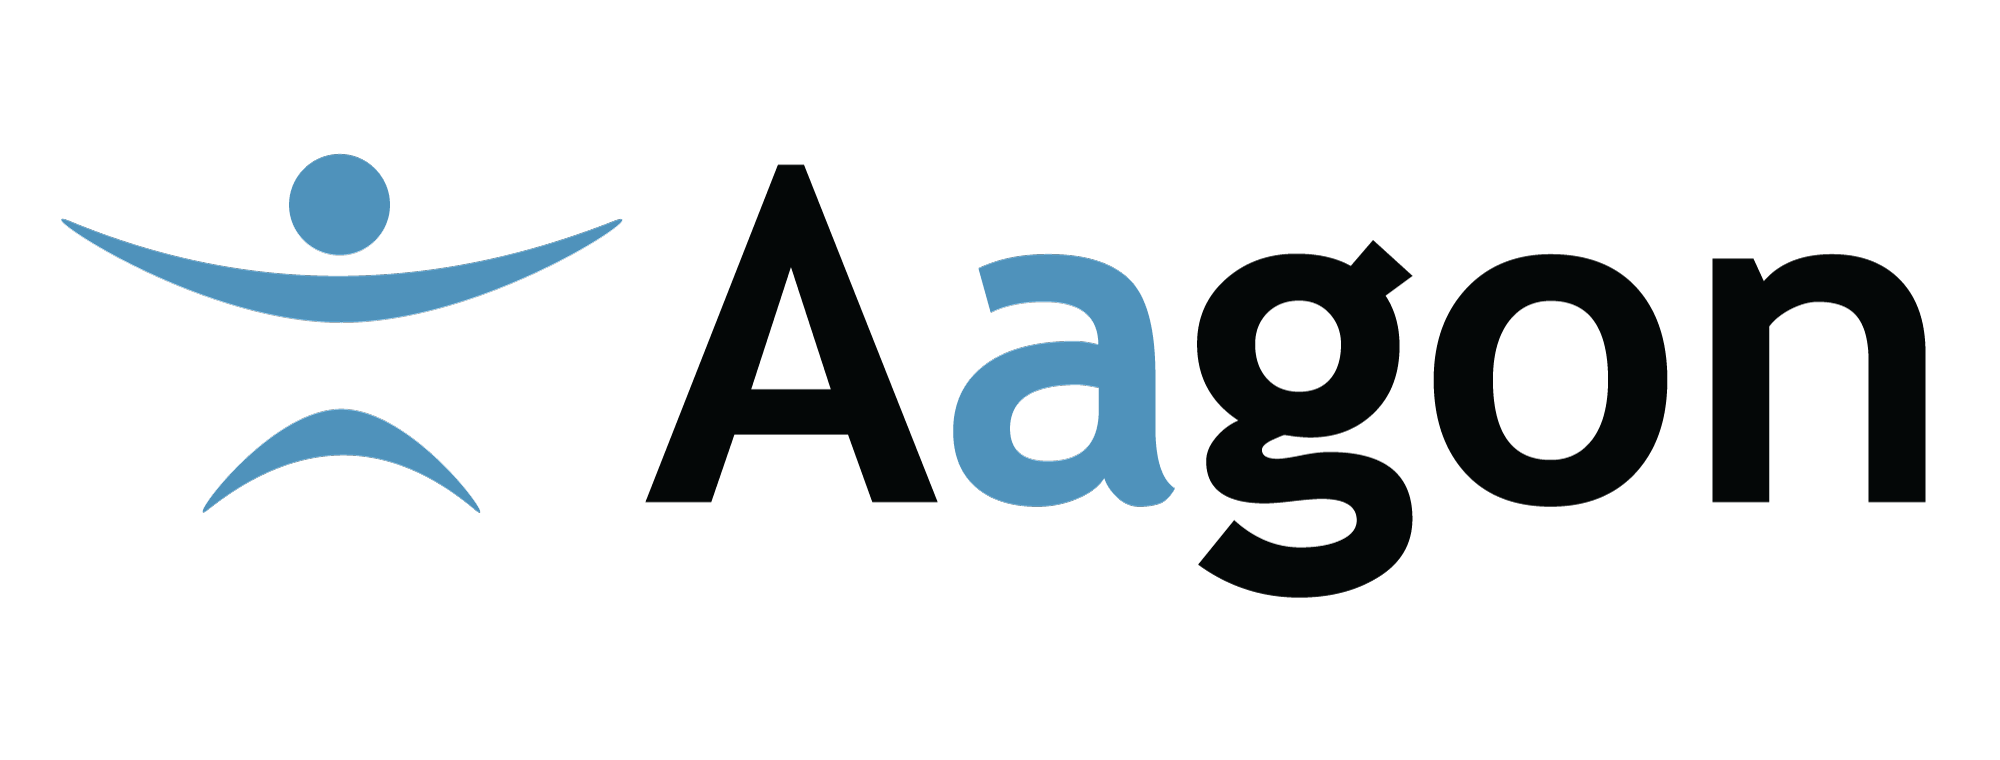 Aagon GmbH